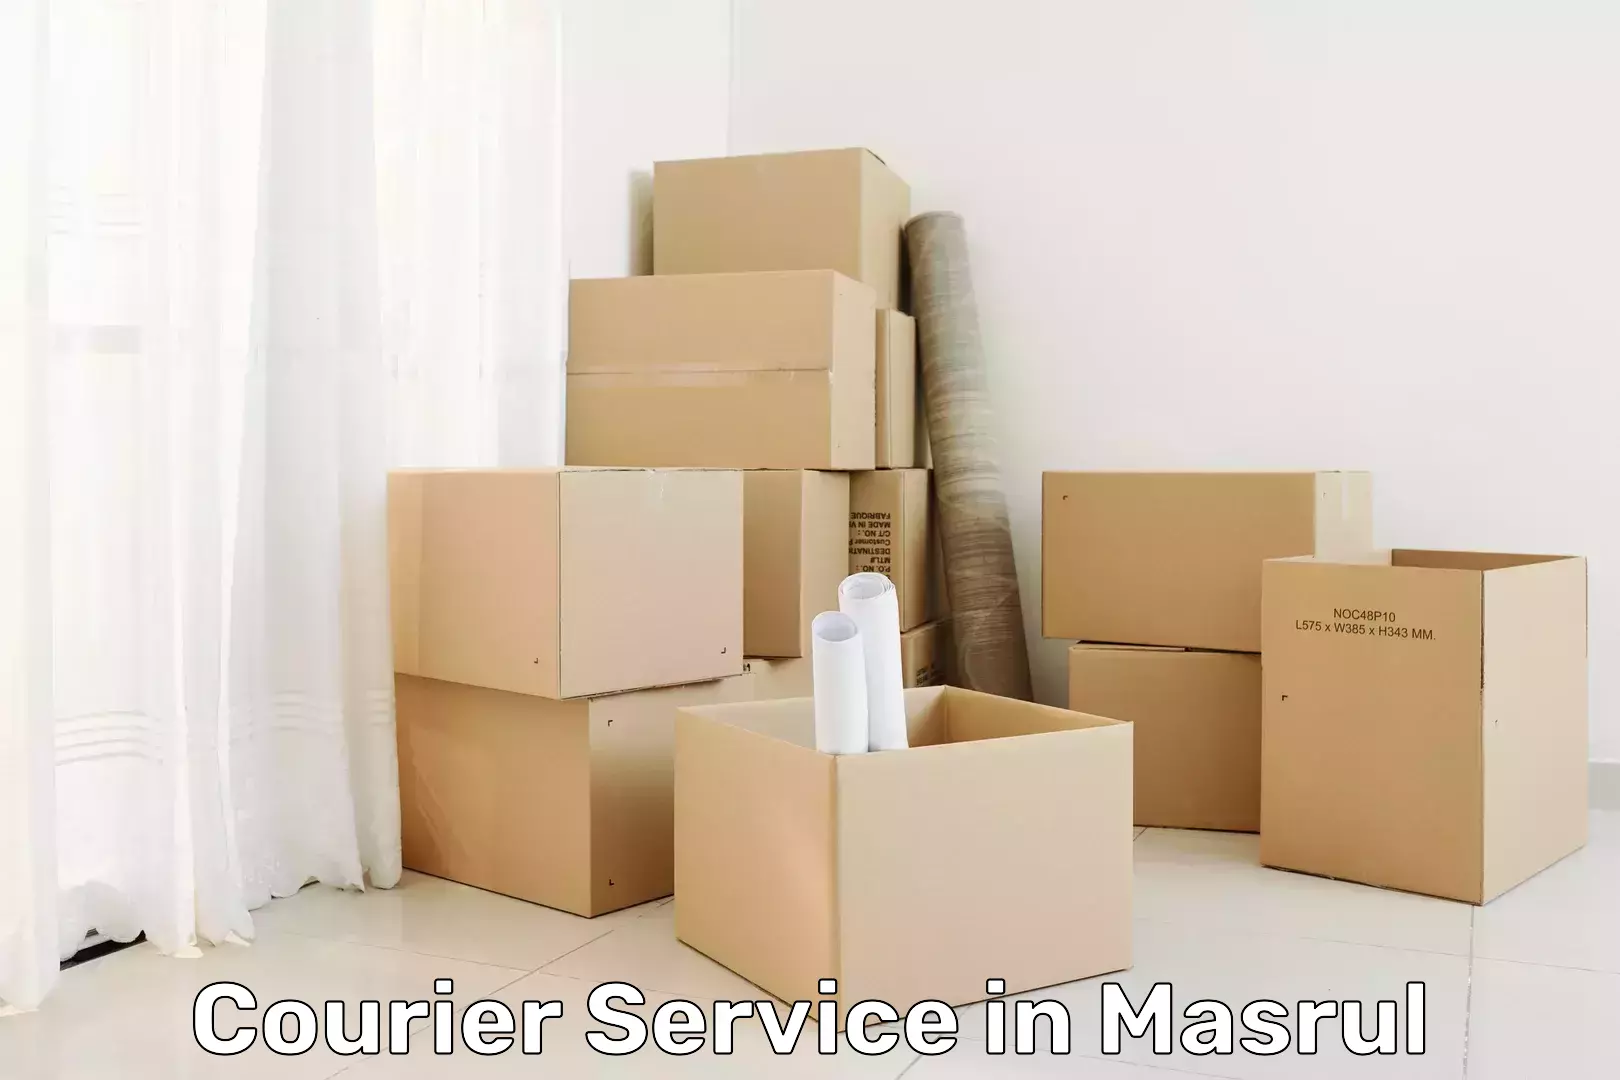 Efficient parcel service in Masrul